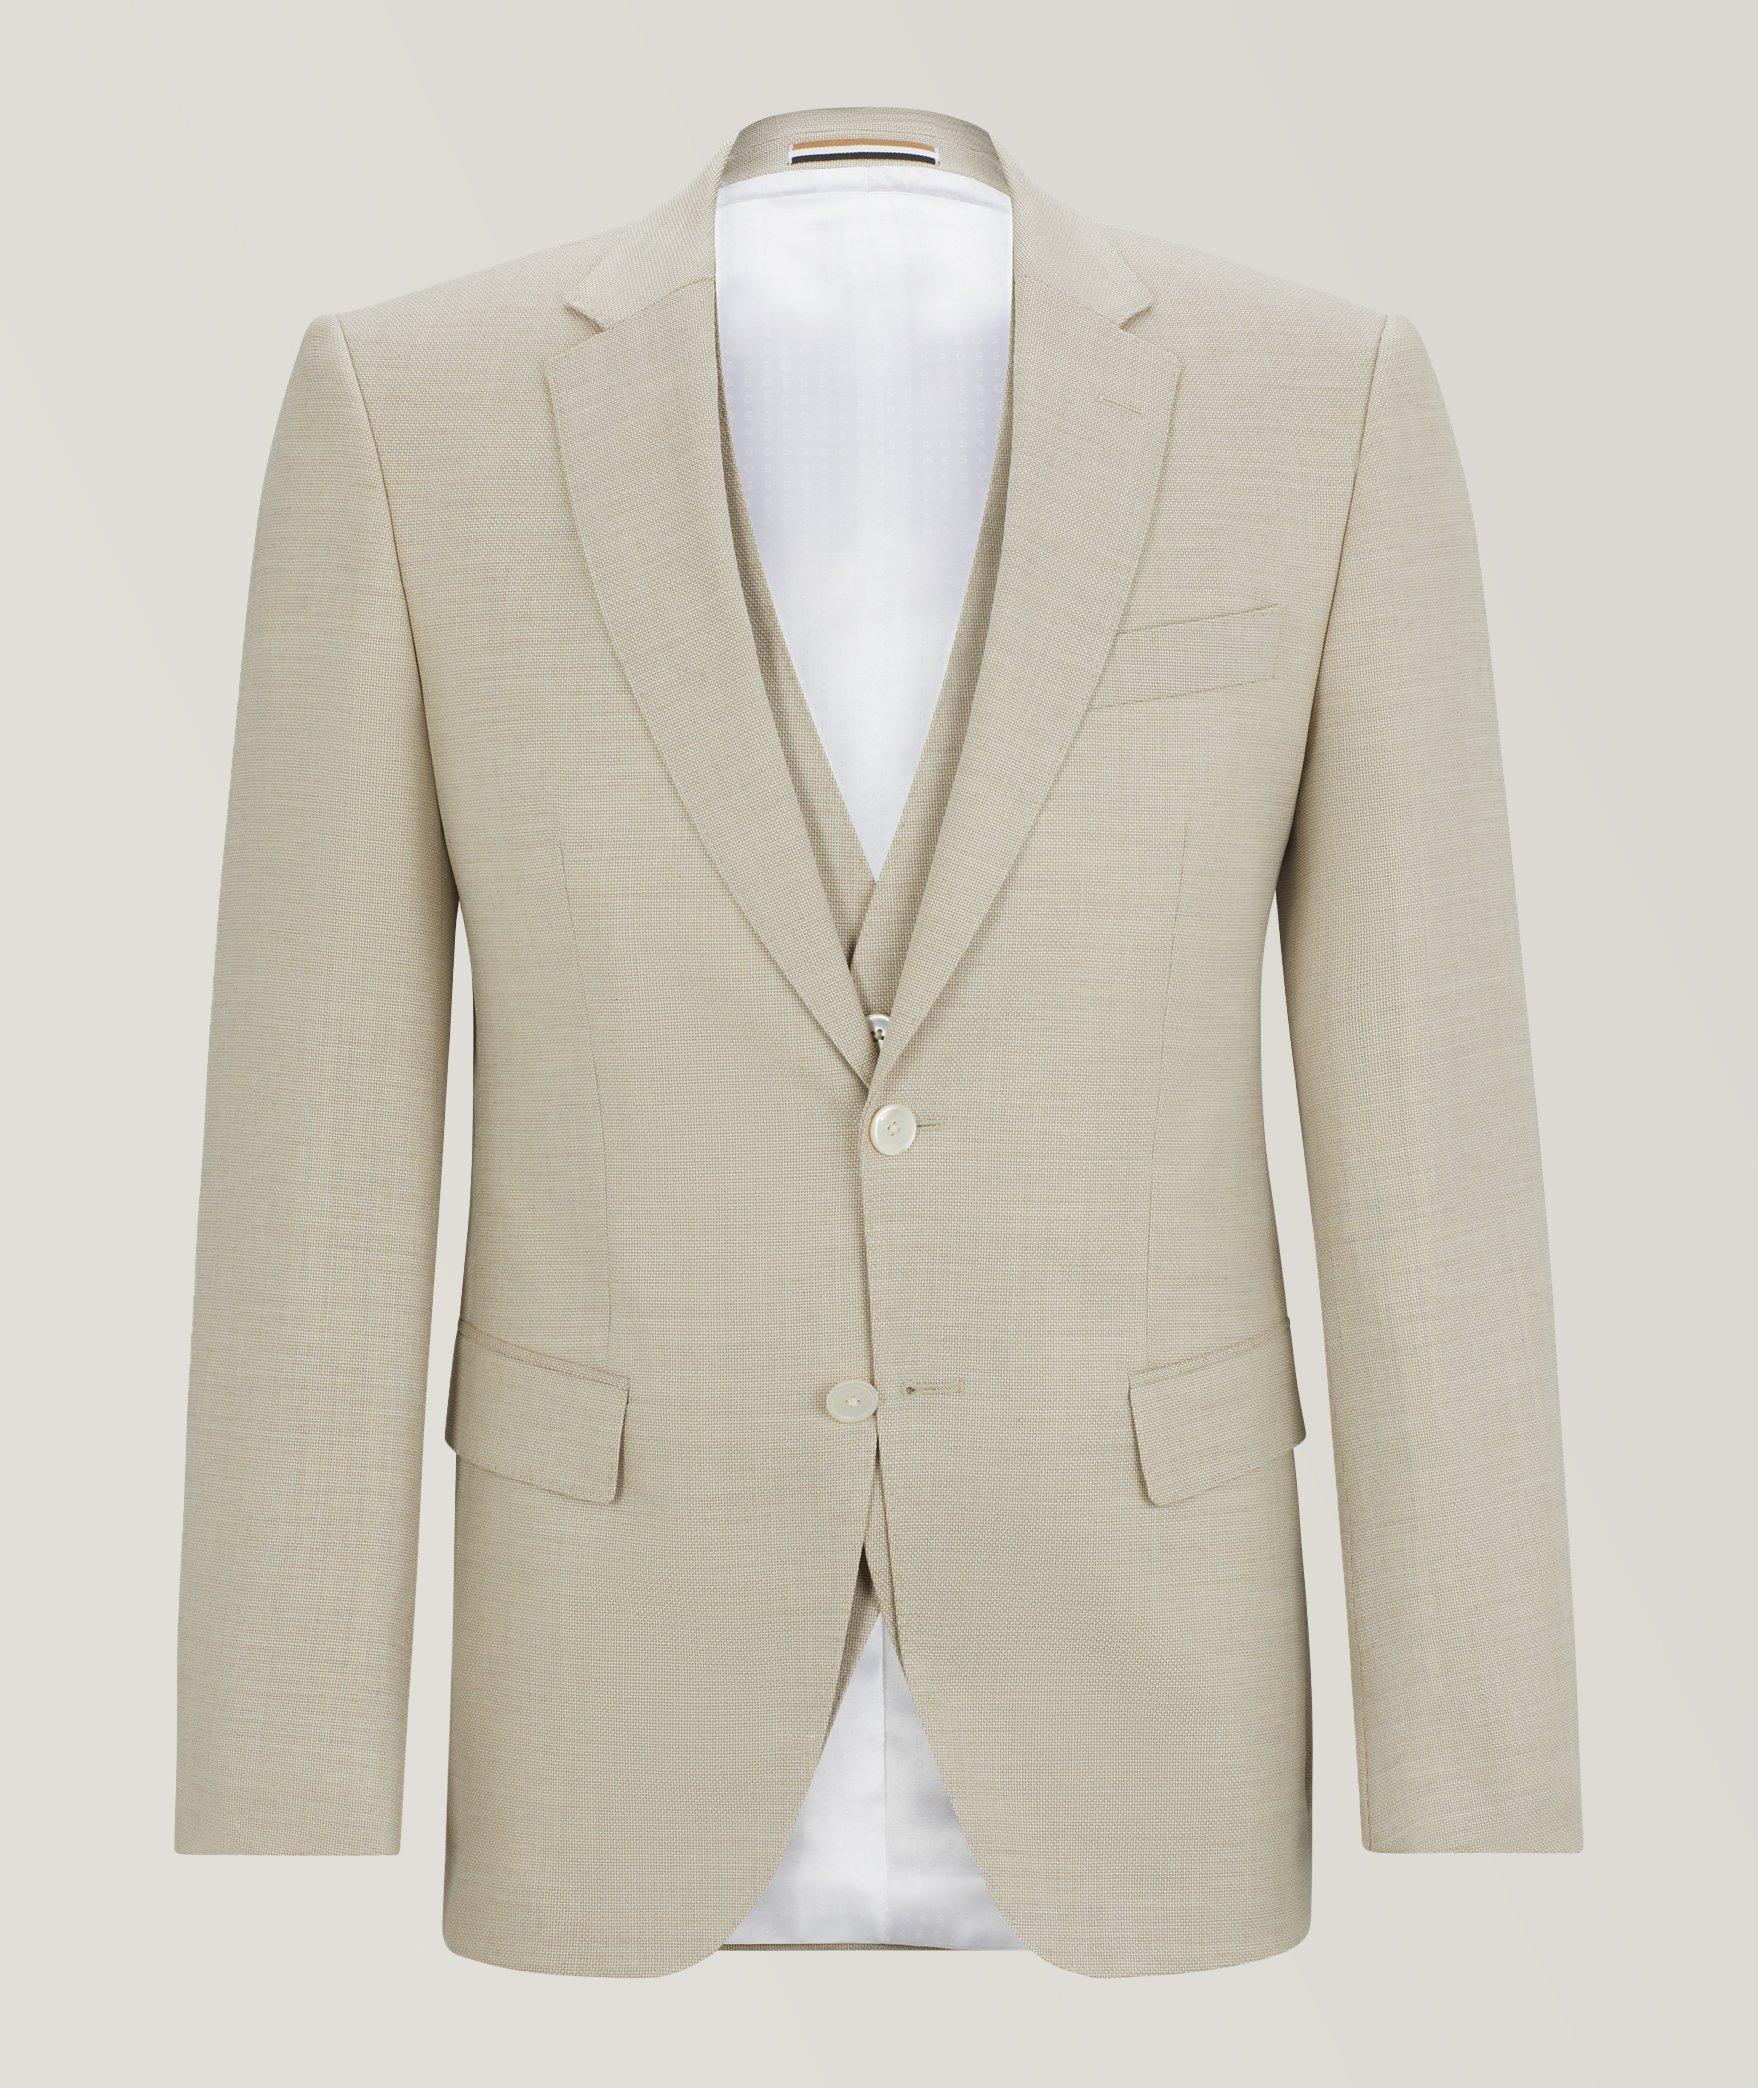 Hopsack Weave Wool-Blend Suit image 0